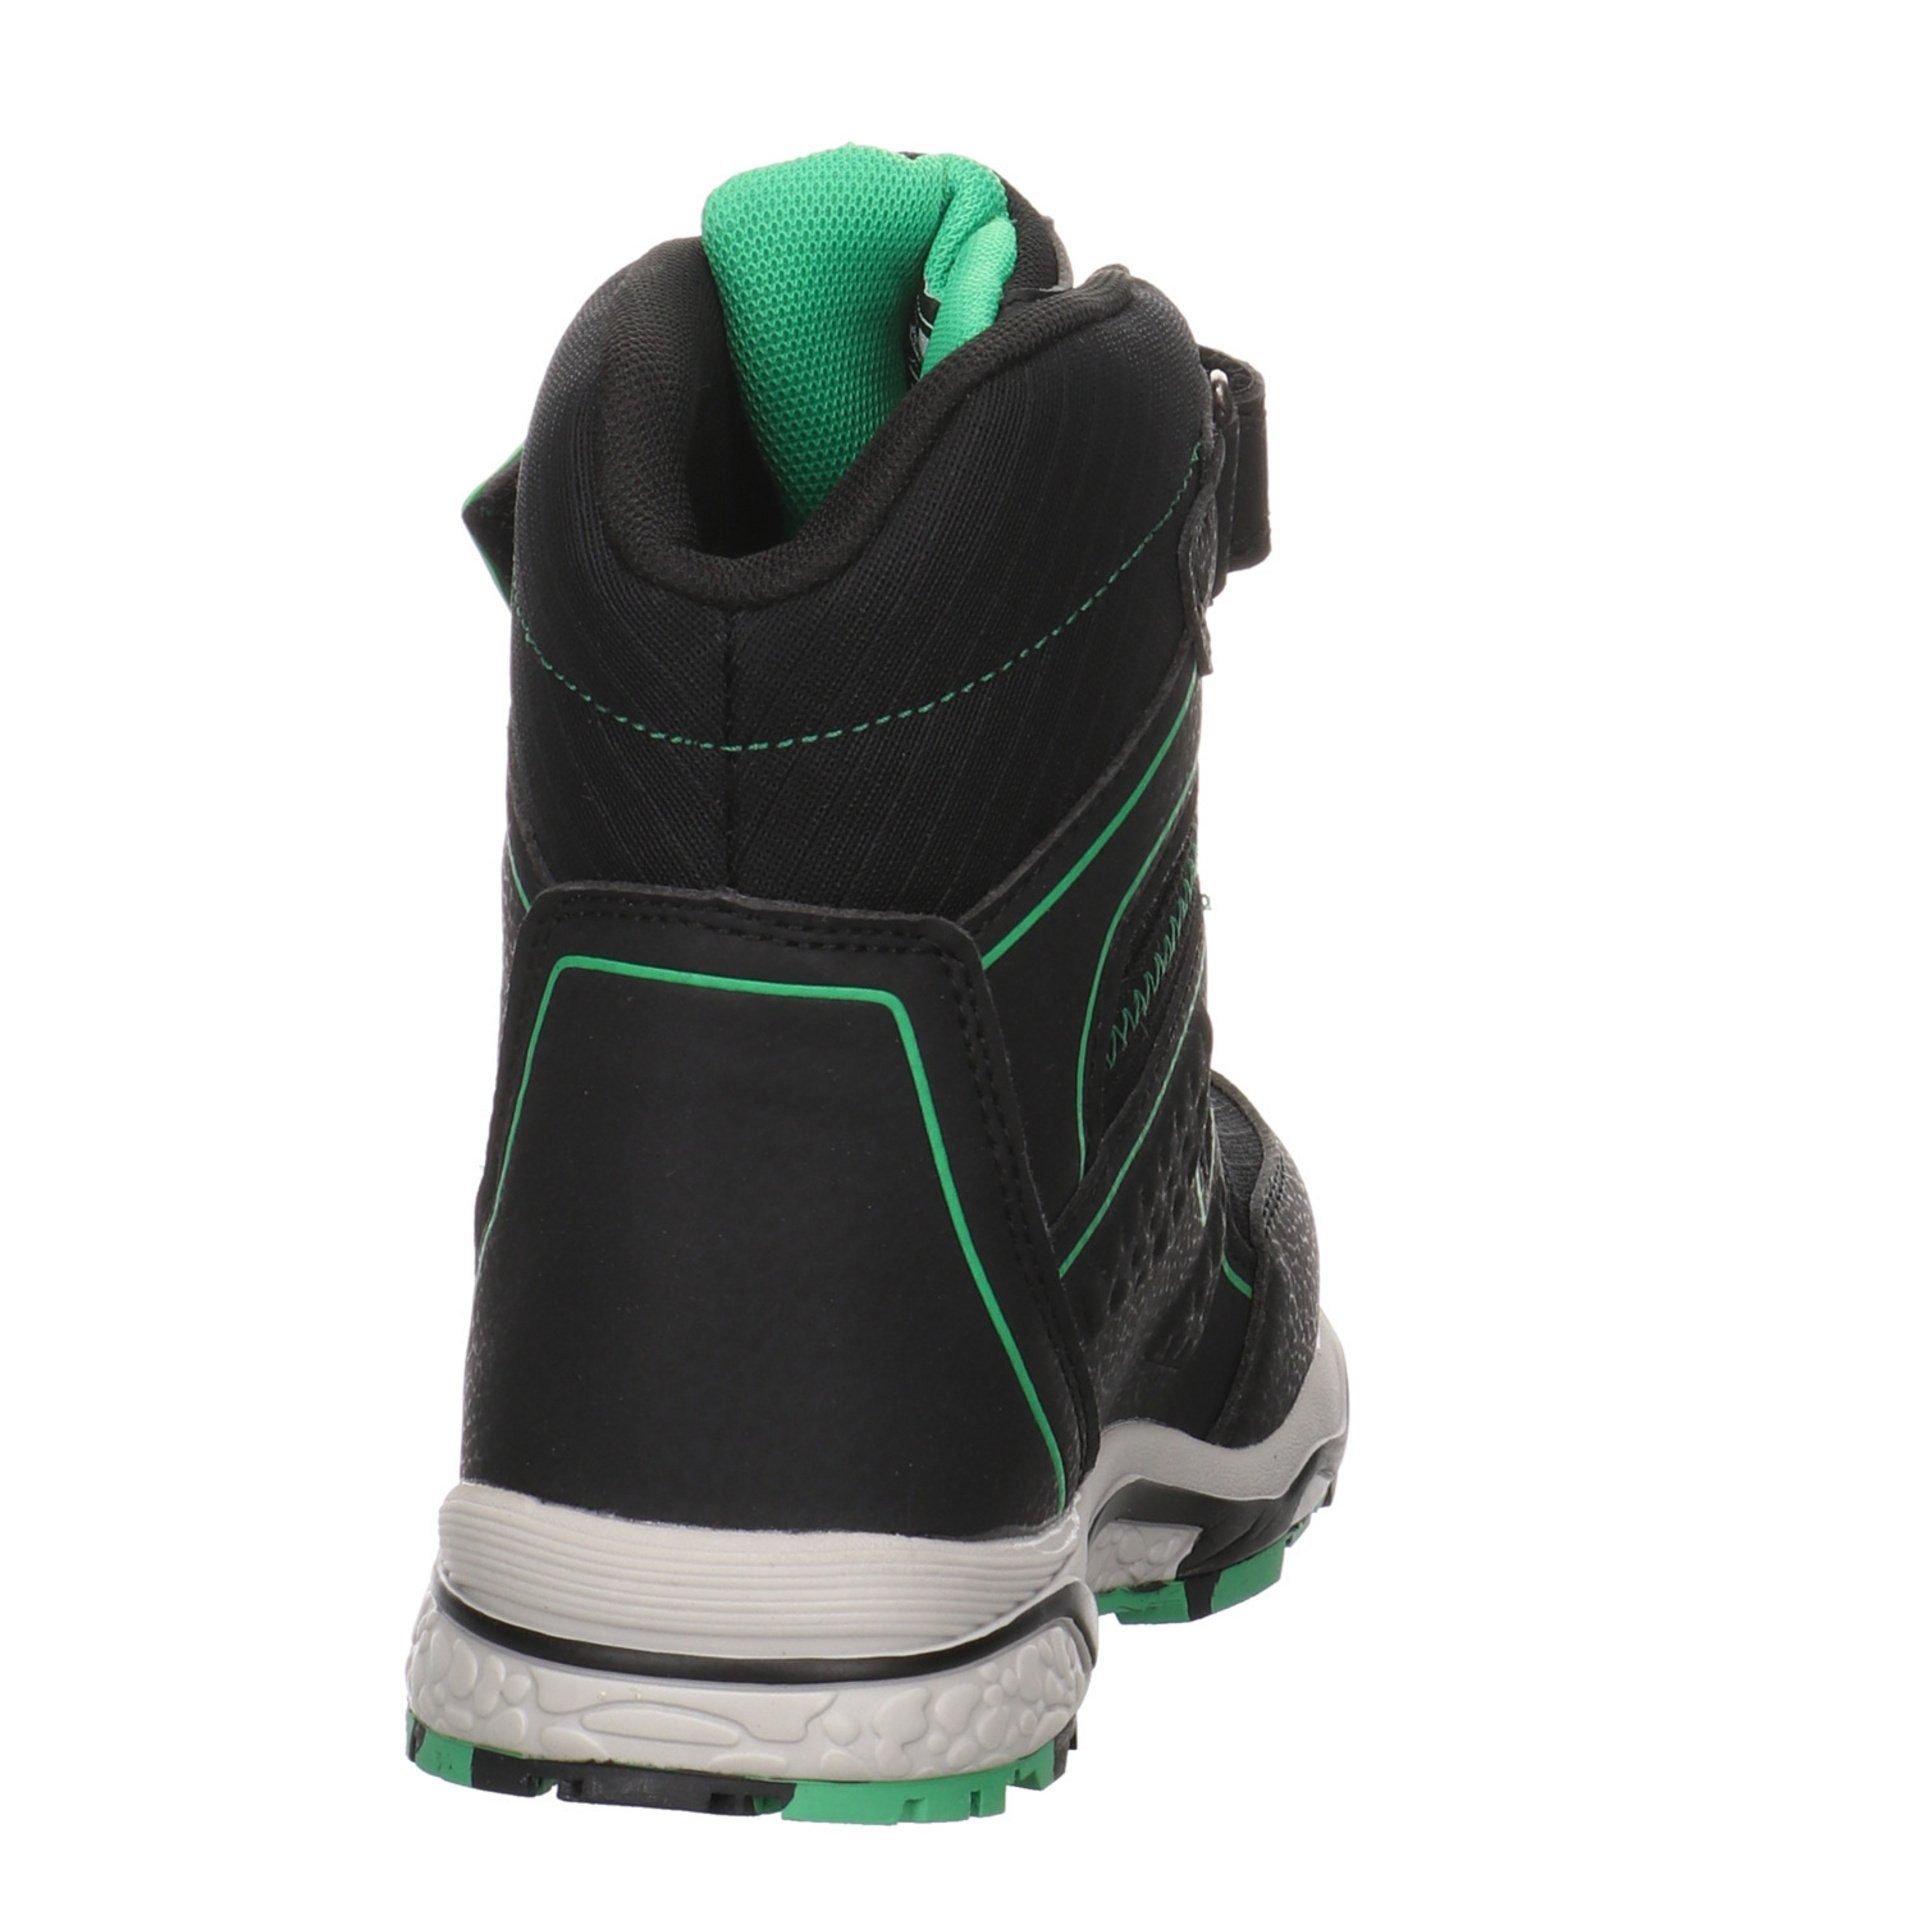 Boots Lurchi Stiefel Schuhe by Jungen Lucian-Tex YK-ID Synthetikkombination green Stiefel black